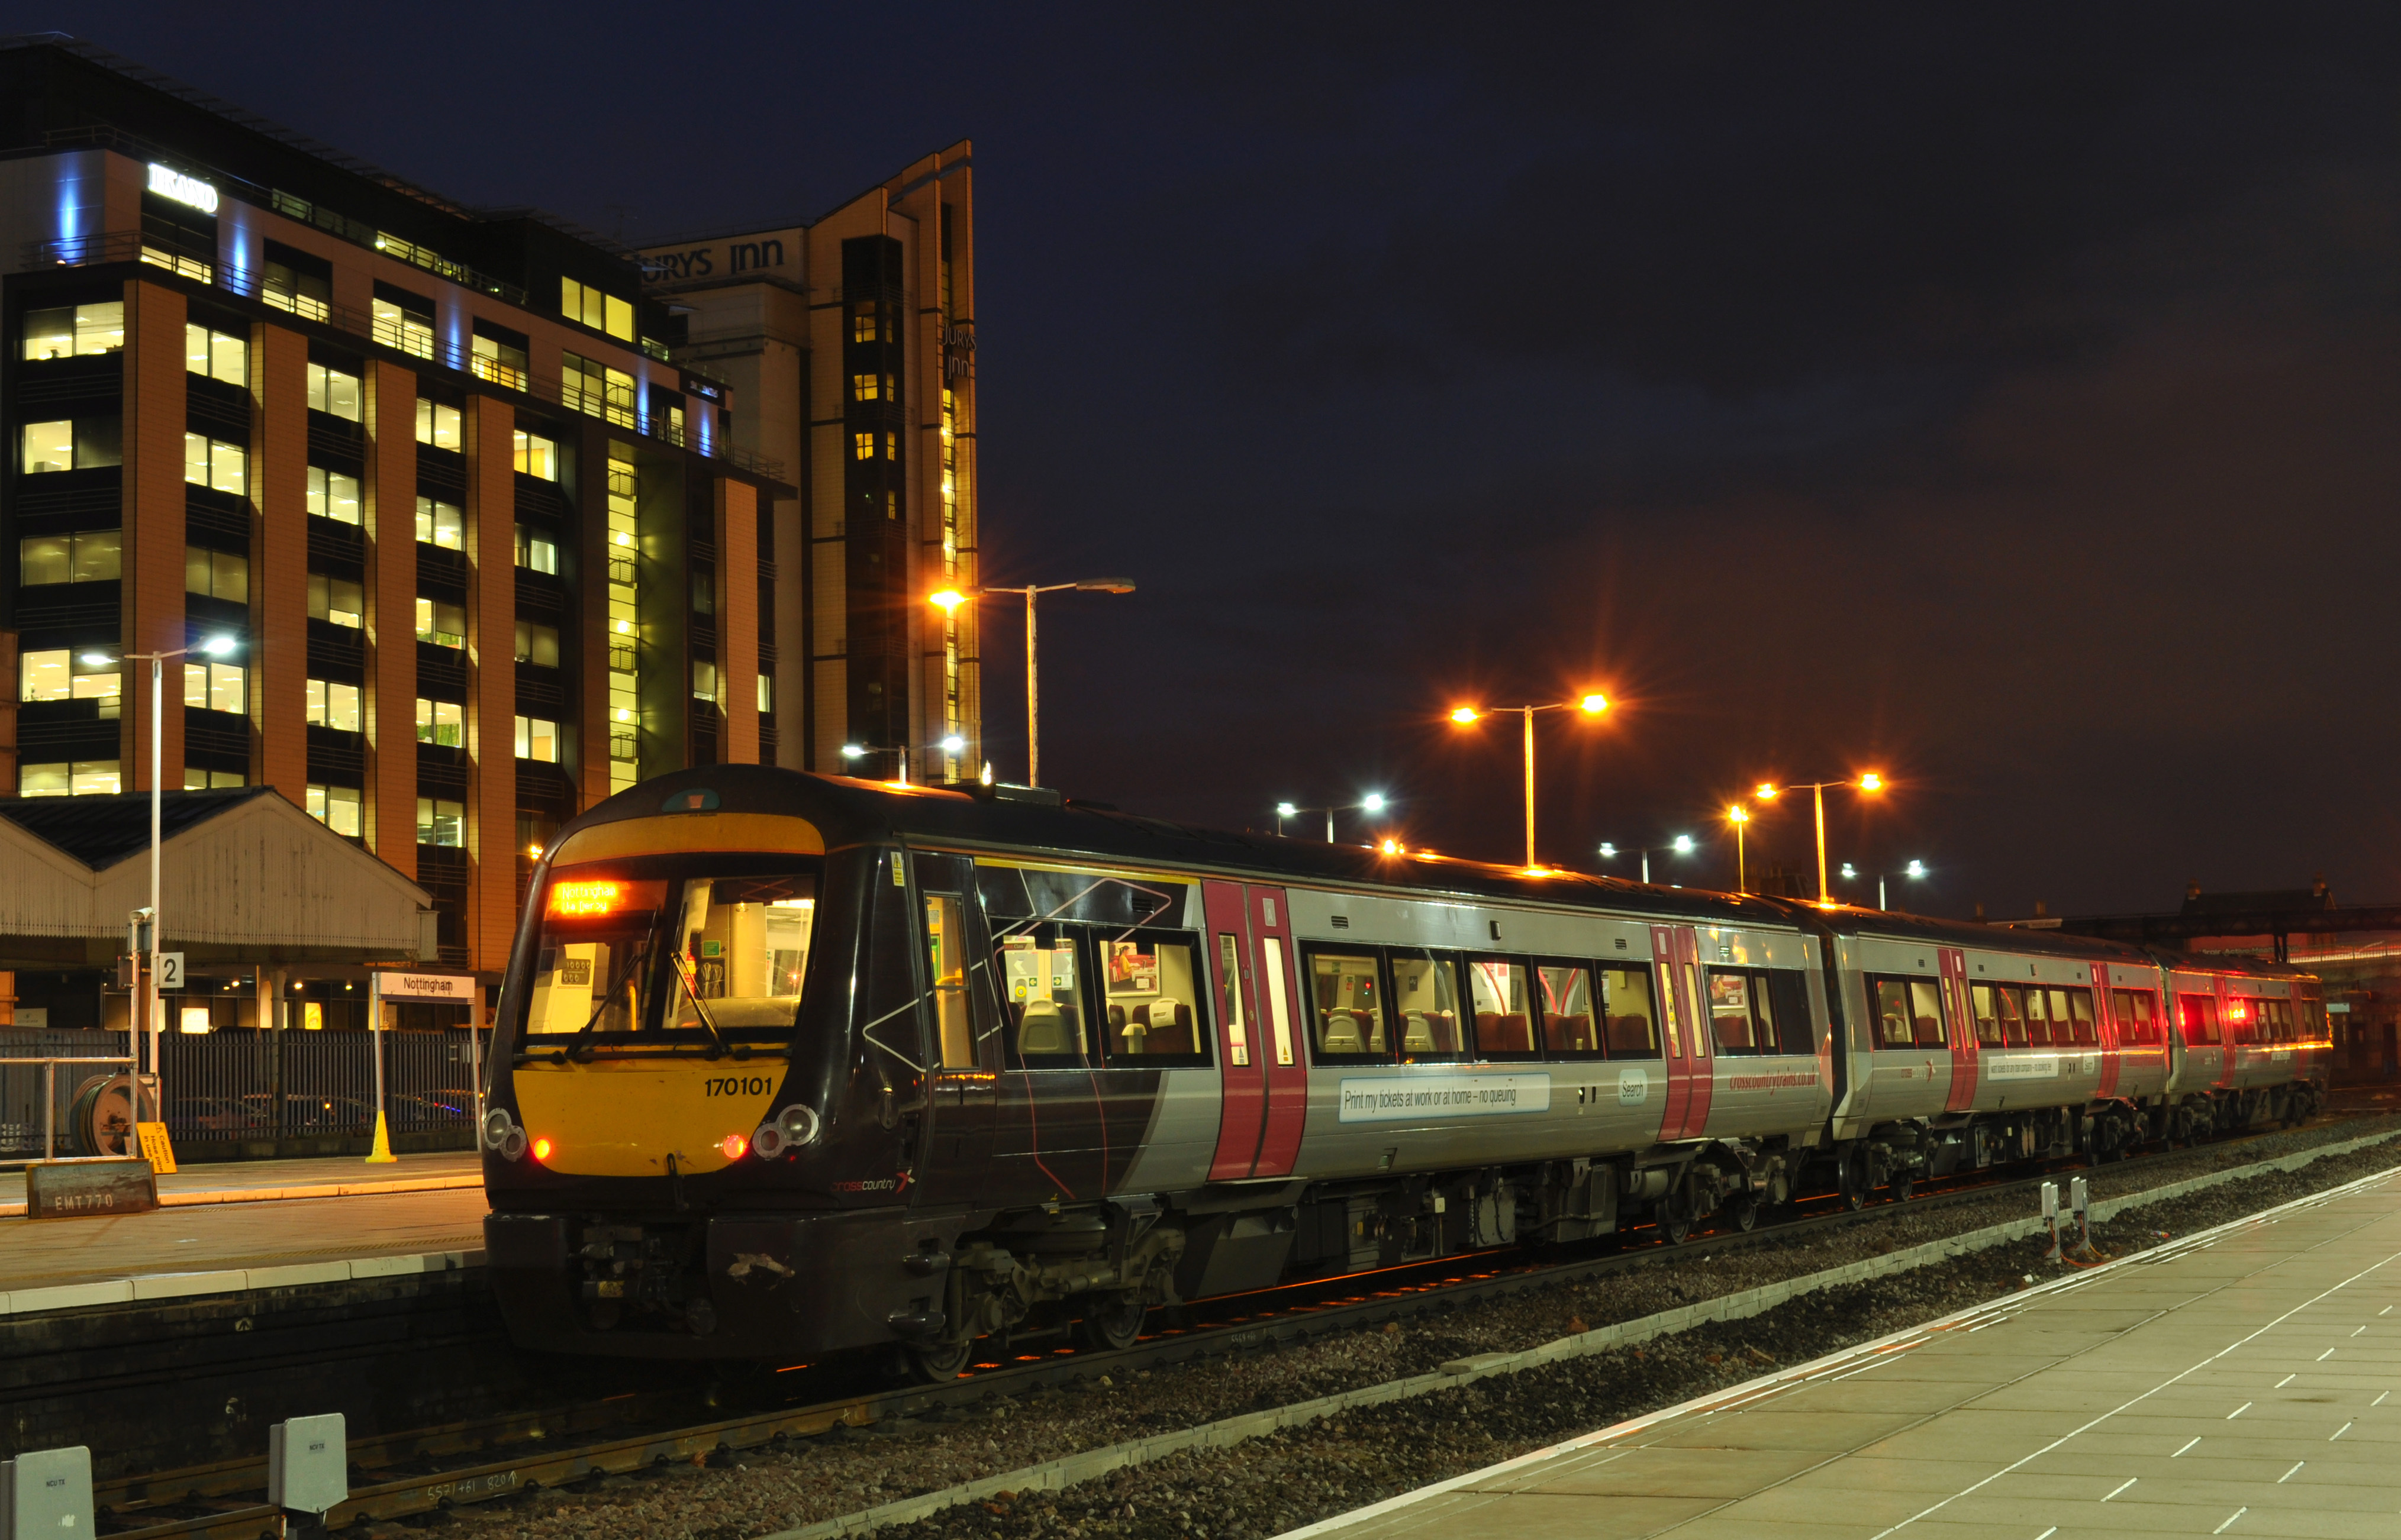 station, vehicles, train, nottingham, train station